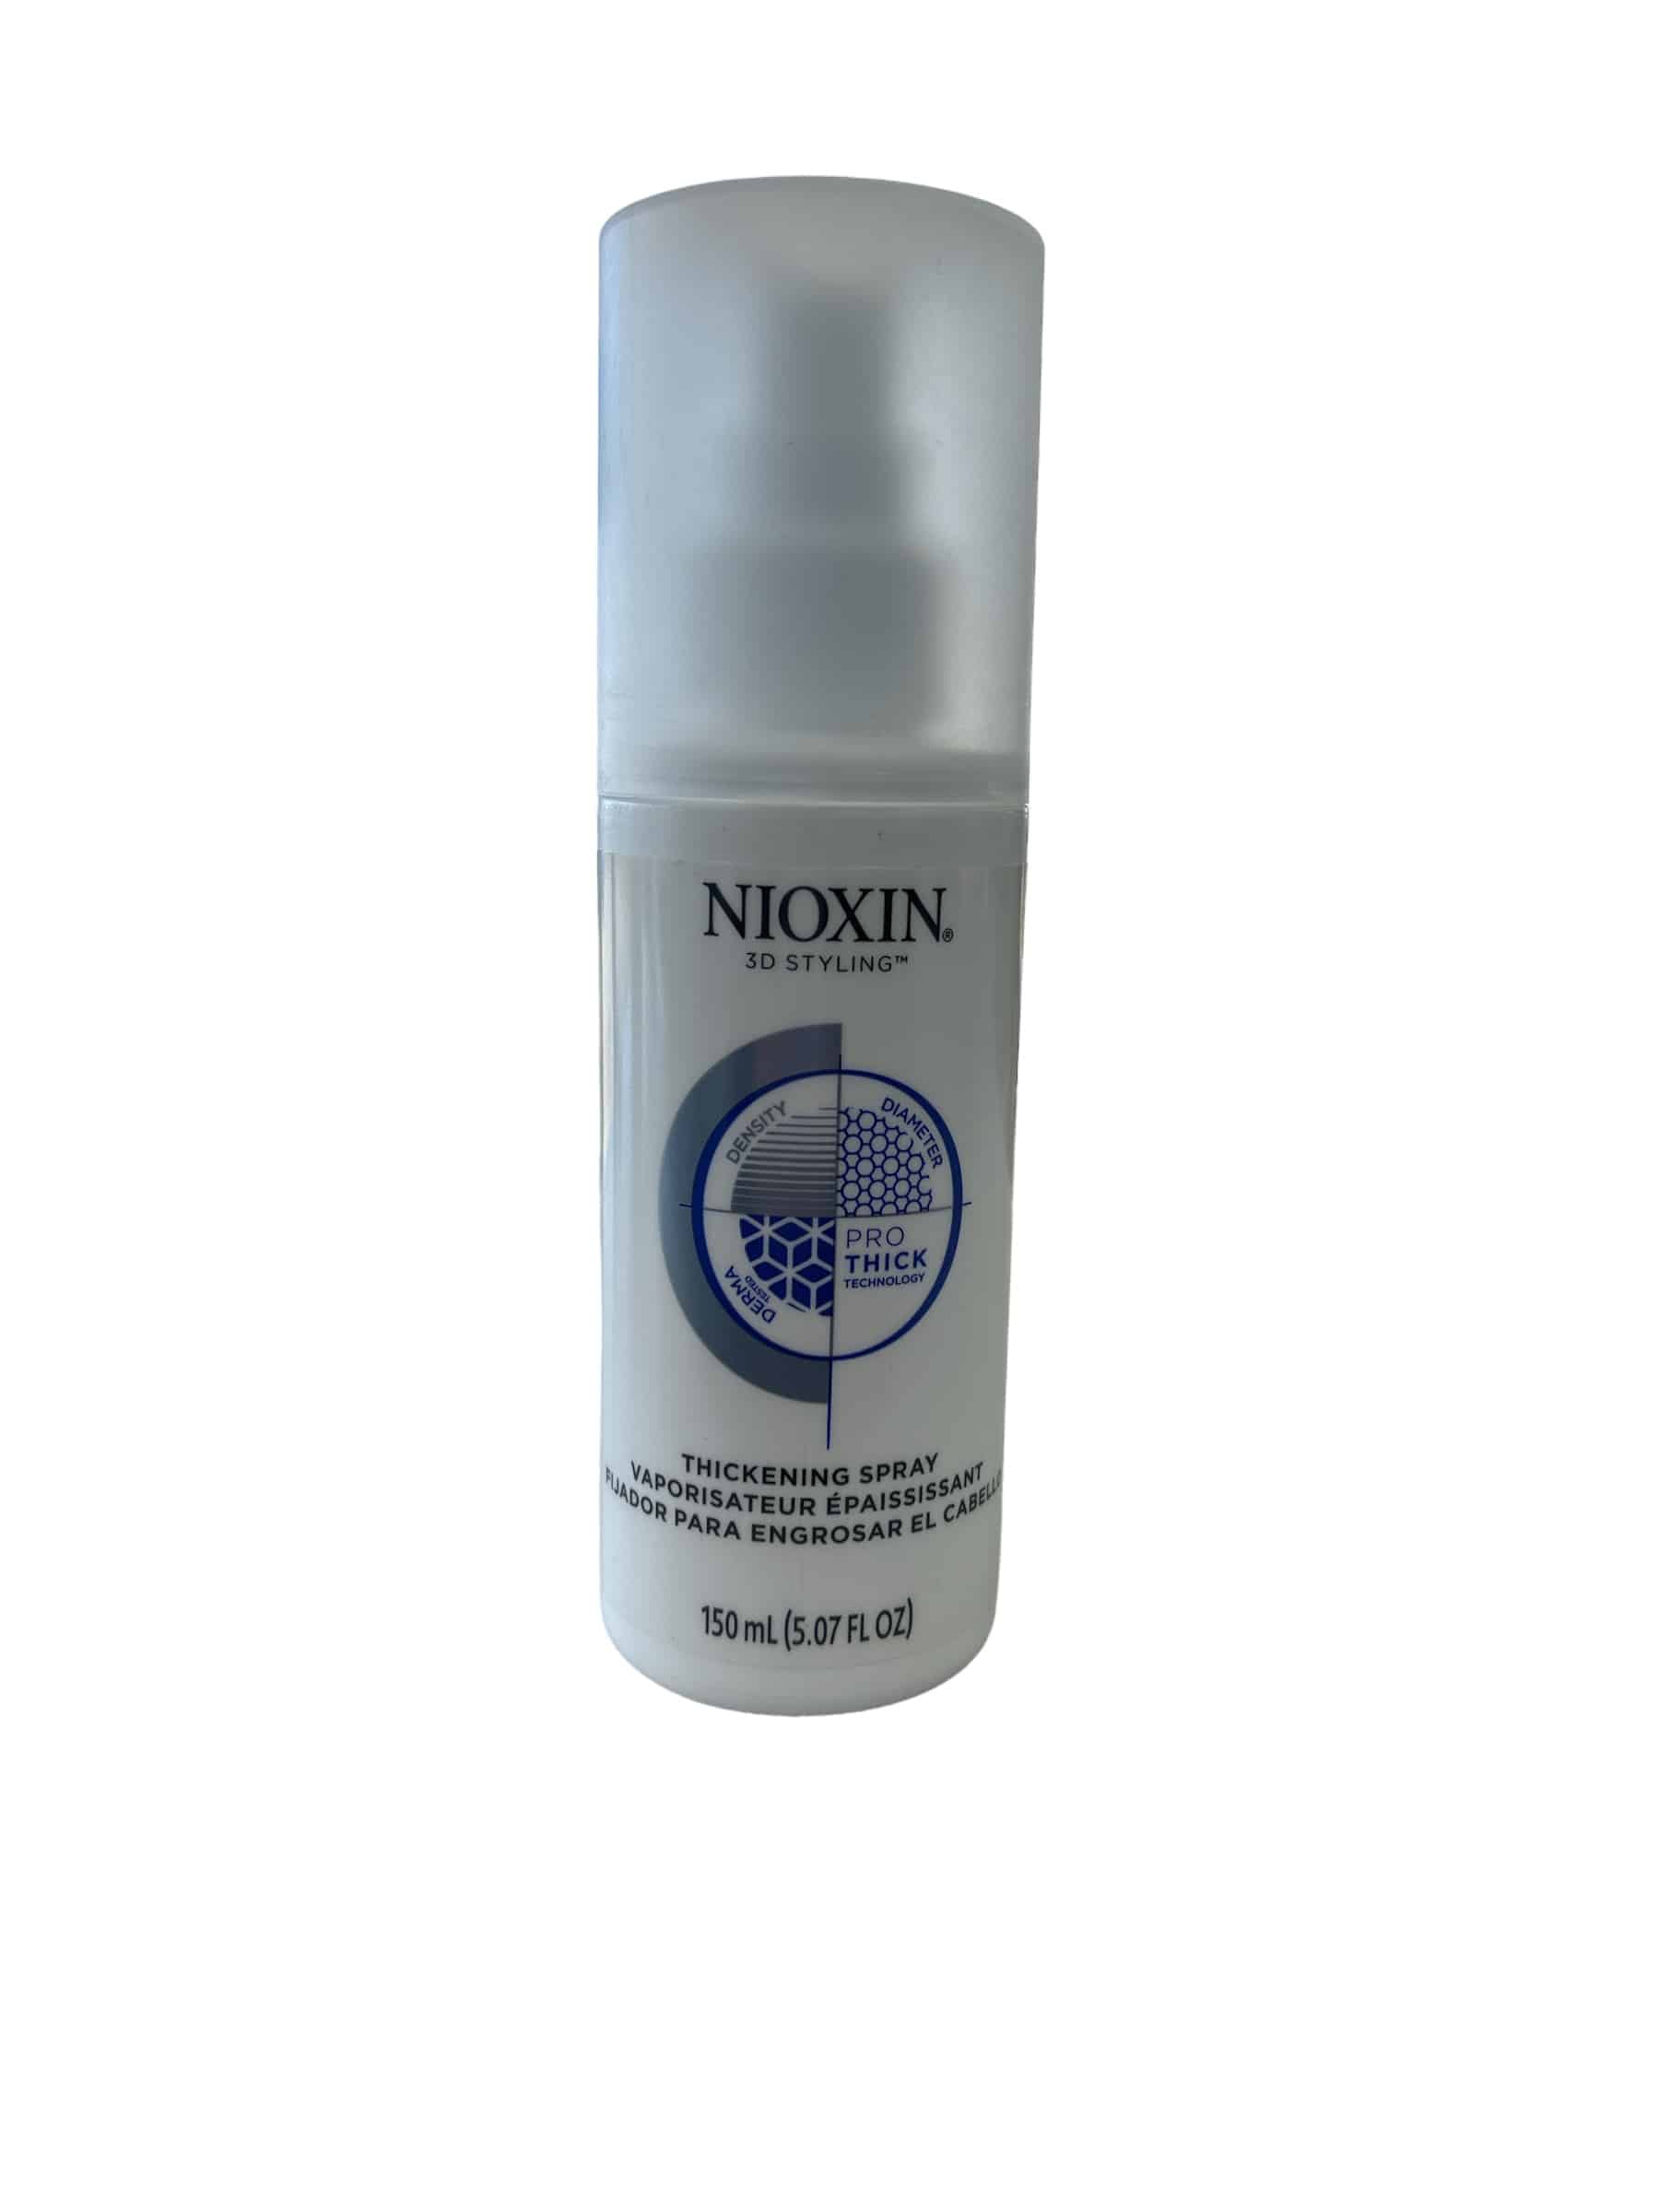 Nioxin Thickening Spray Gel • Richard Kroll Salon, Allentown PA